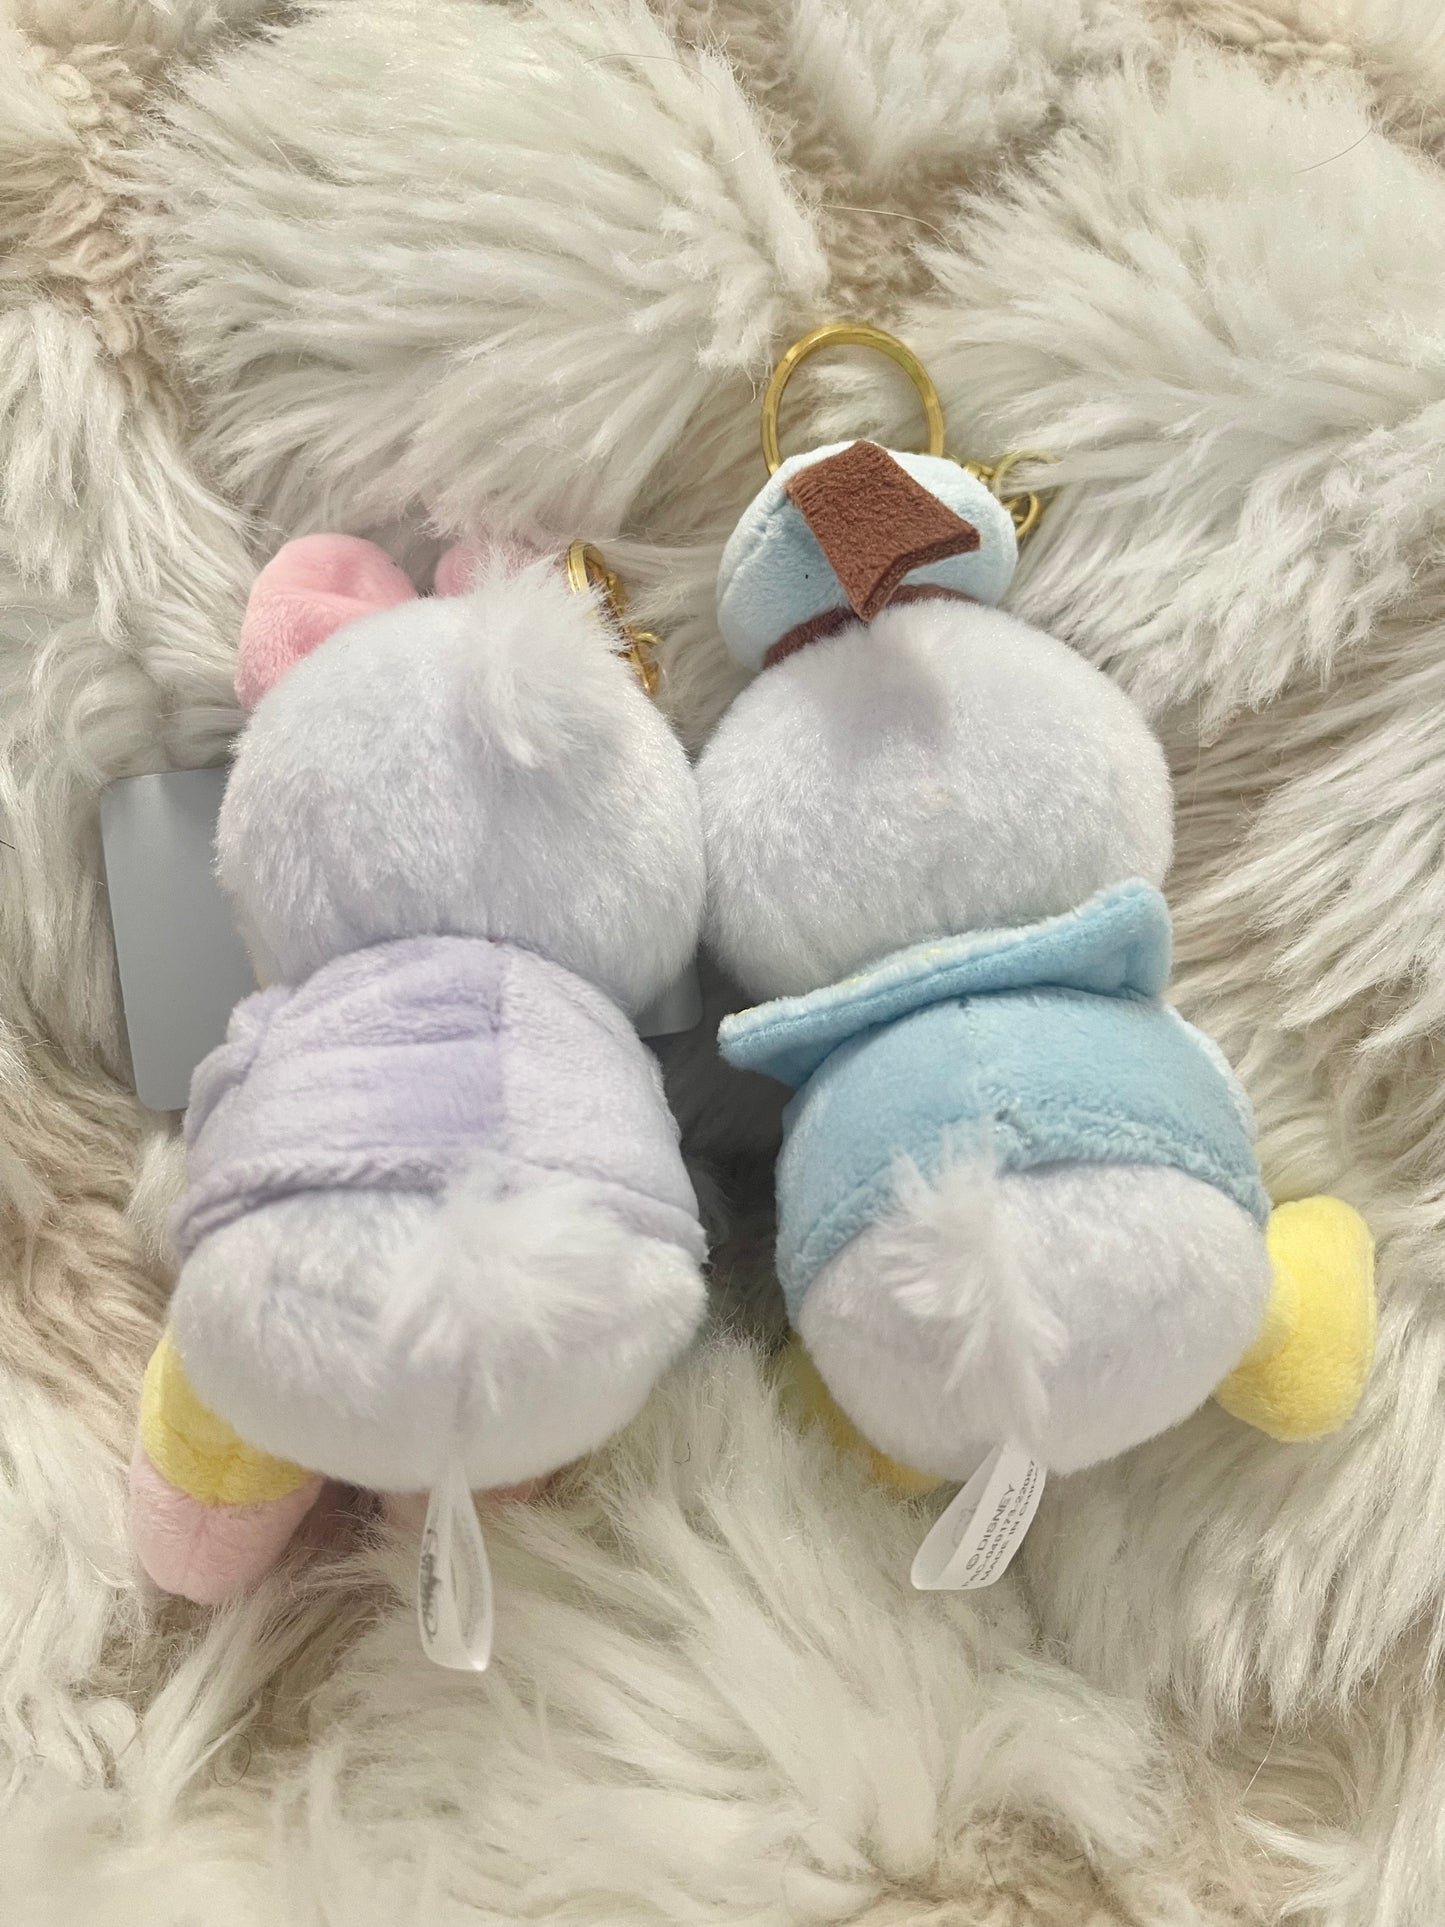 Disney store Japan sleepy Donald and daisy keychain plush